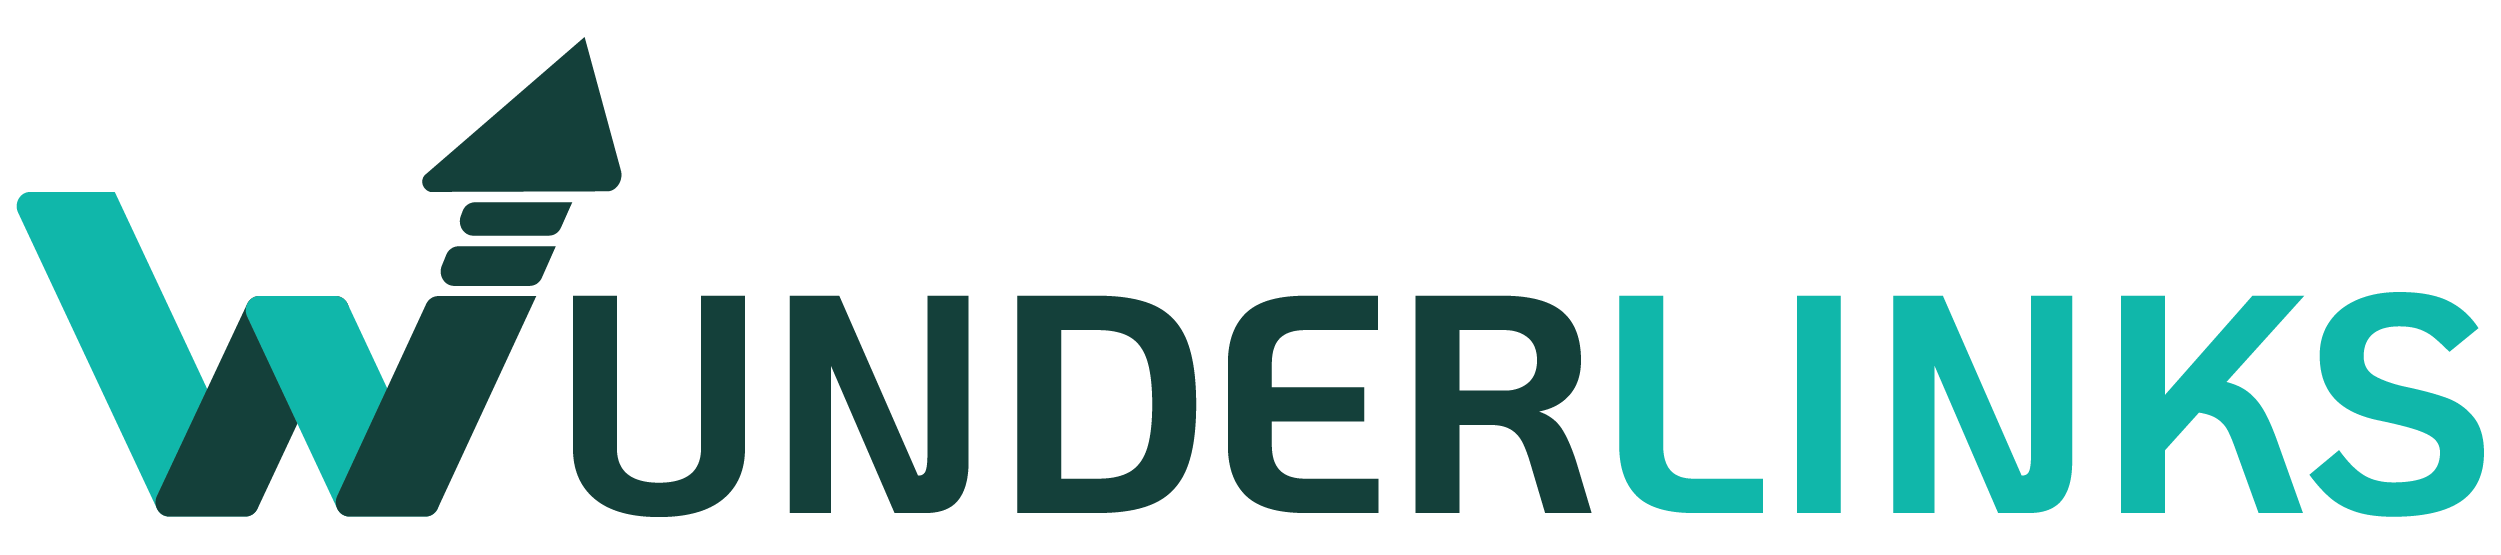 Wunderlinks Logo